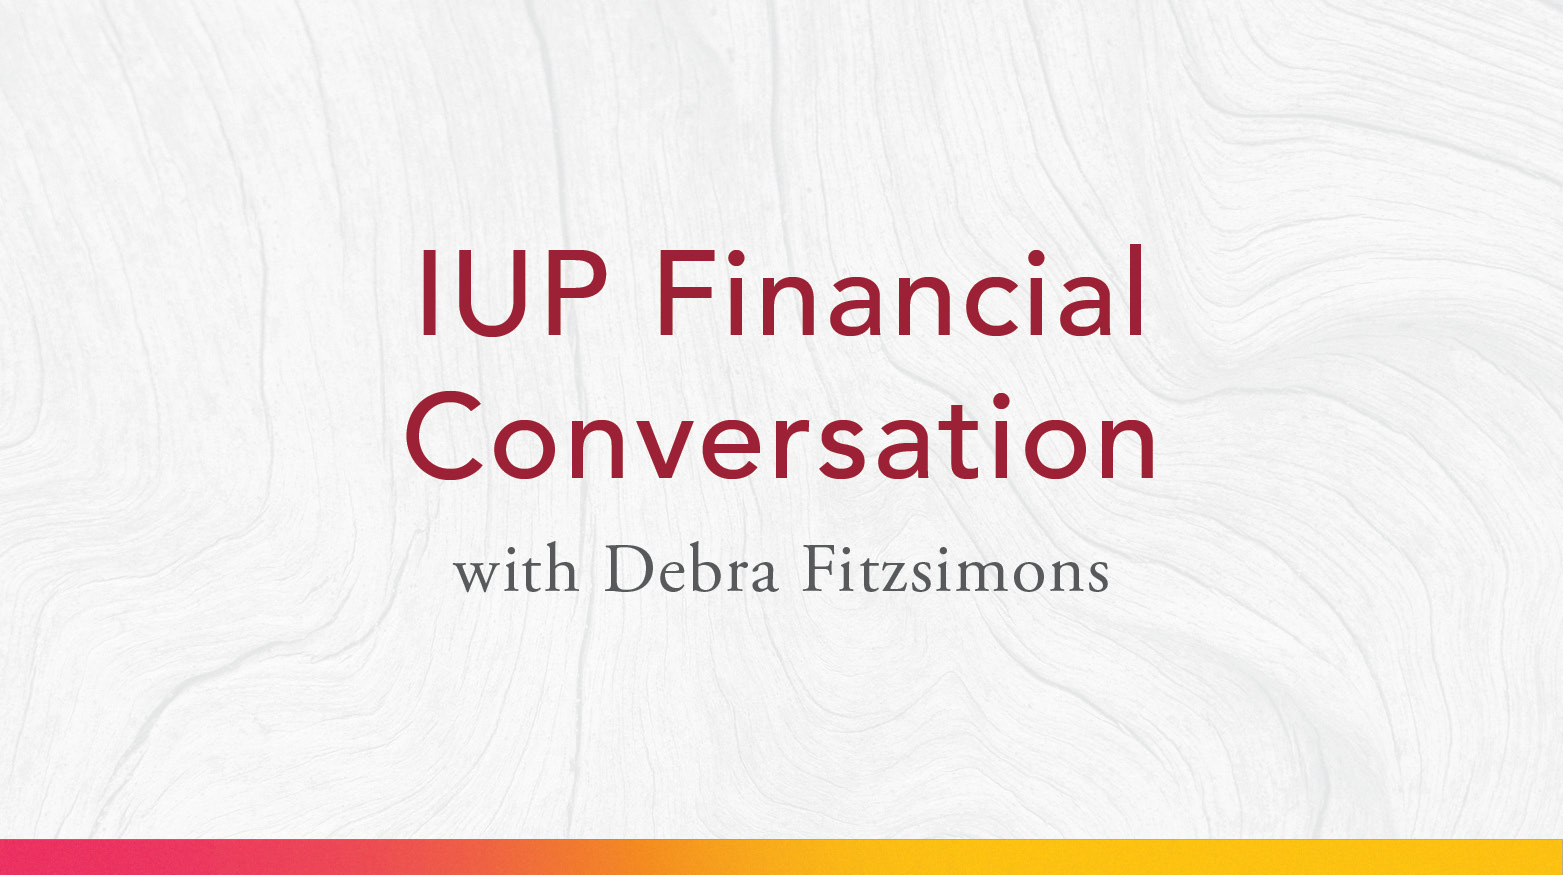 A Conversation About IUP's Future